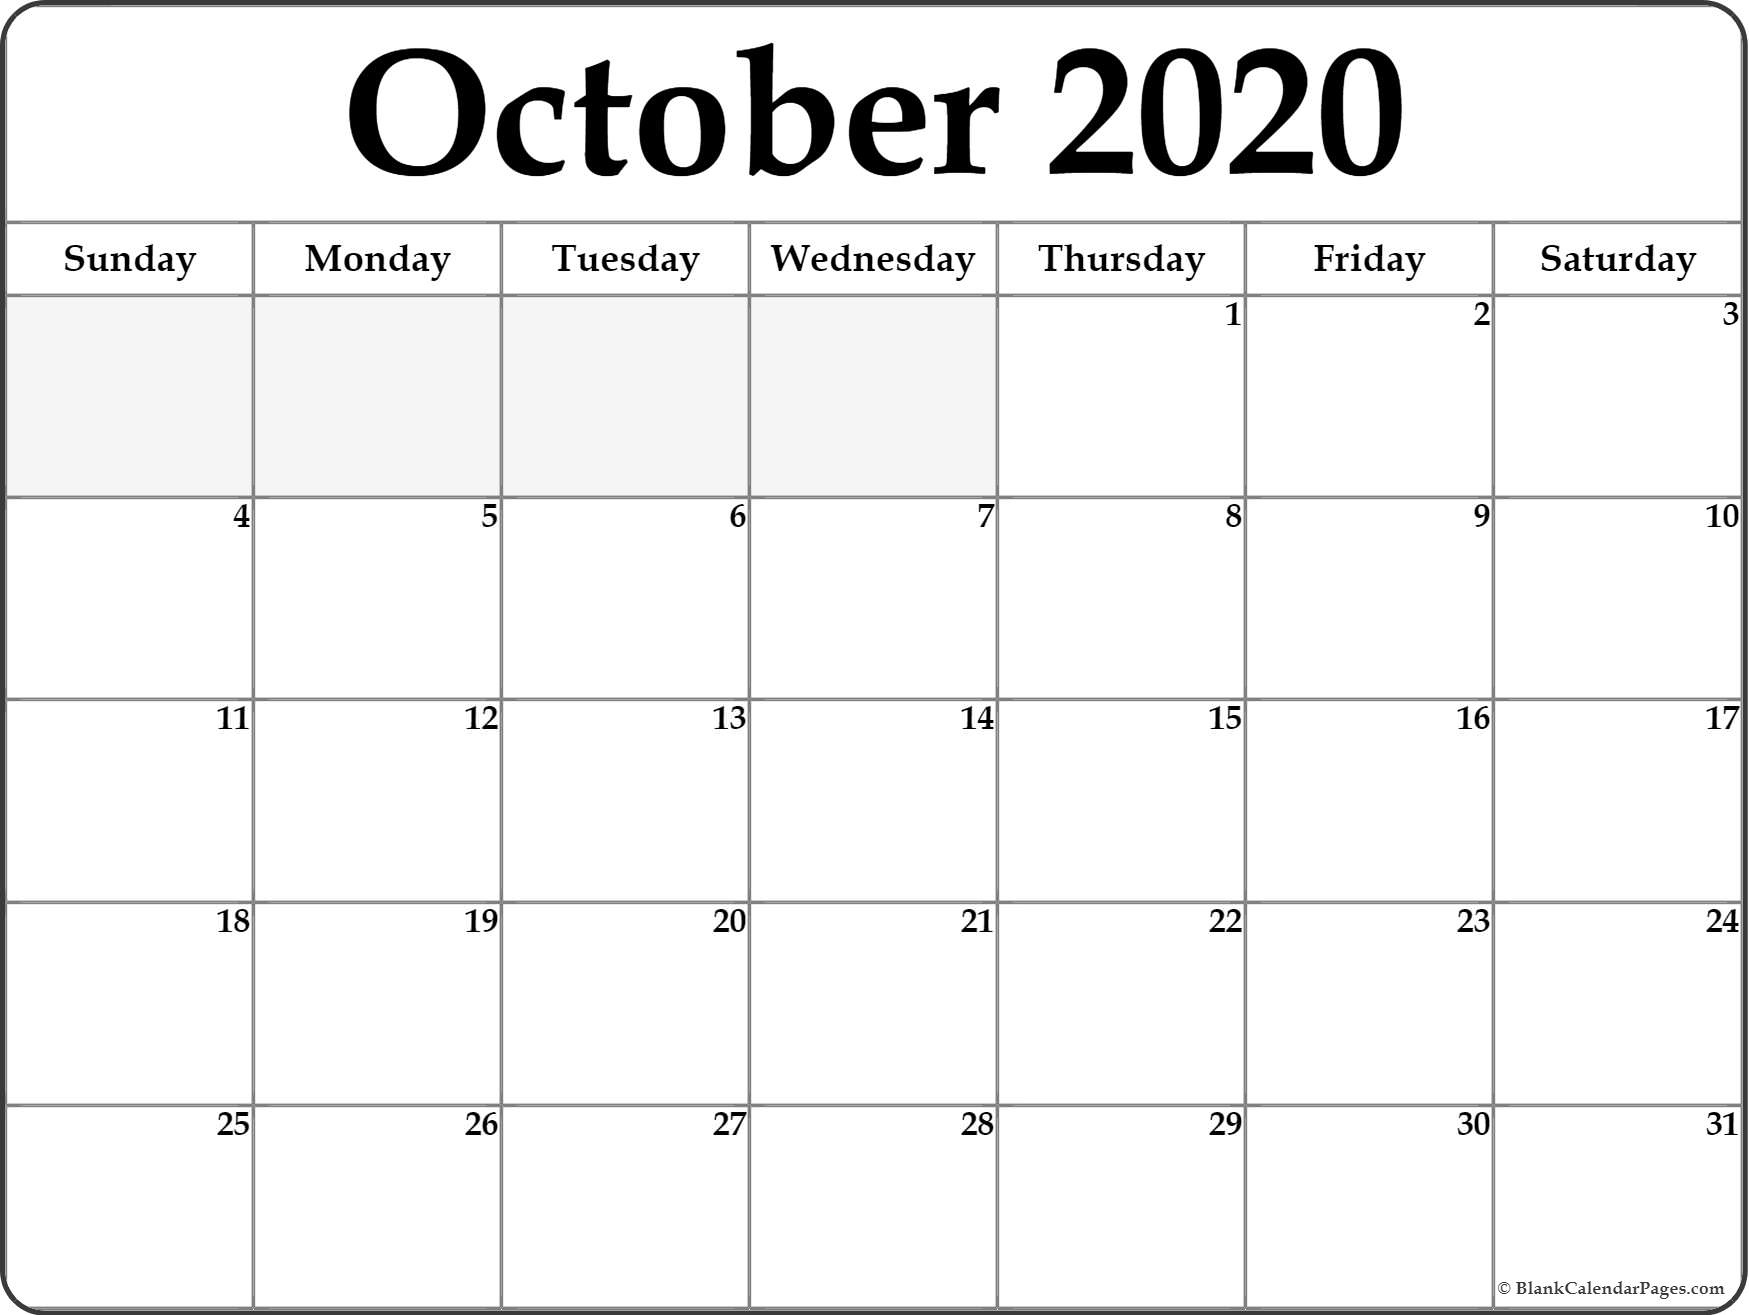 October 2020 Calendar | Free Printable Monthly Calendars